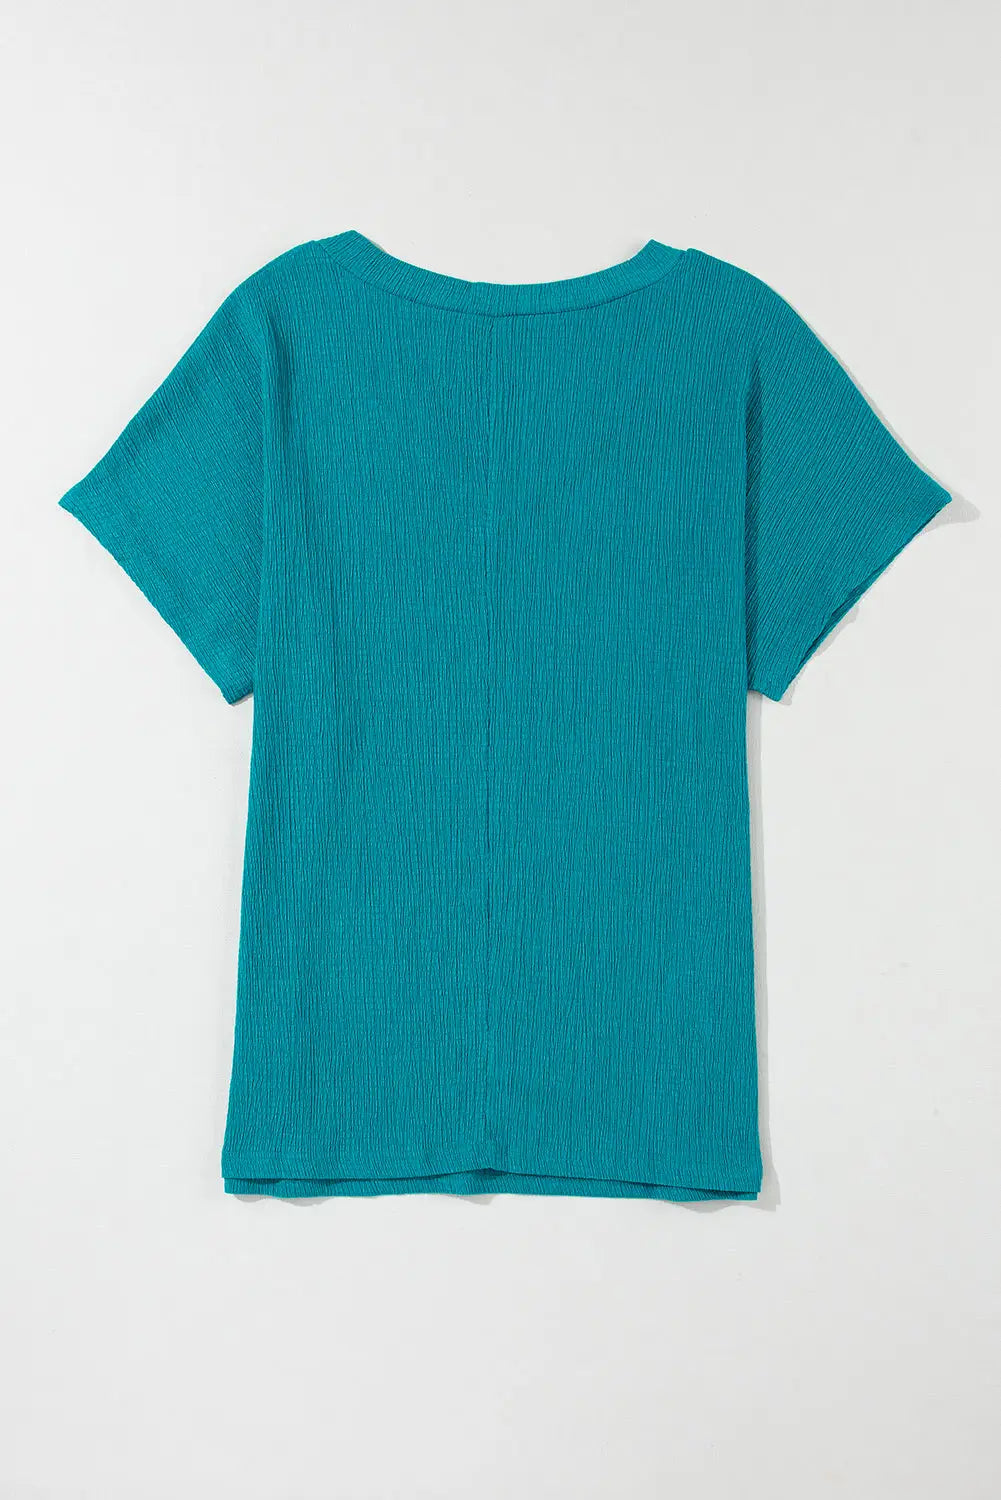 Blue sapphire crinkled v neck wide sleeve t-shirt - tops